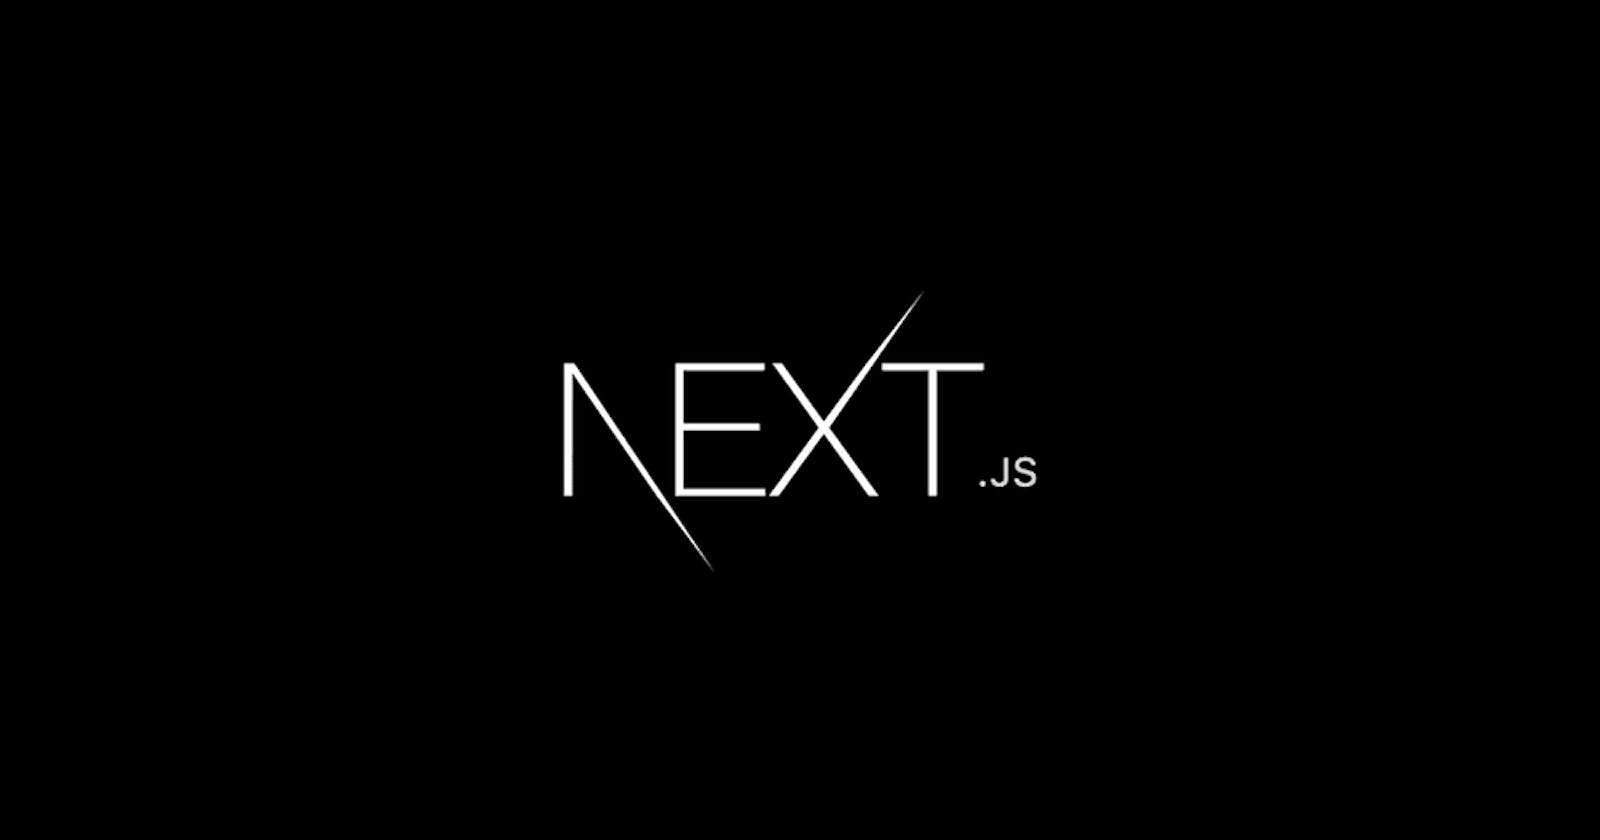 Part 1: Introduction to Next.js